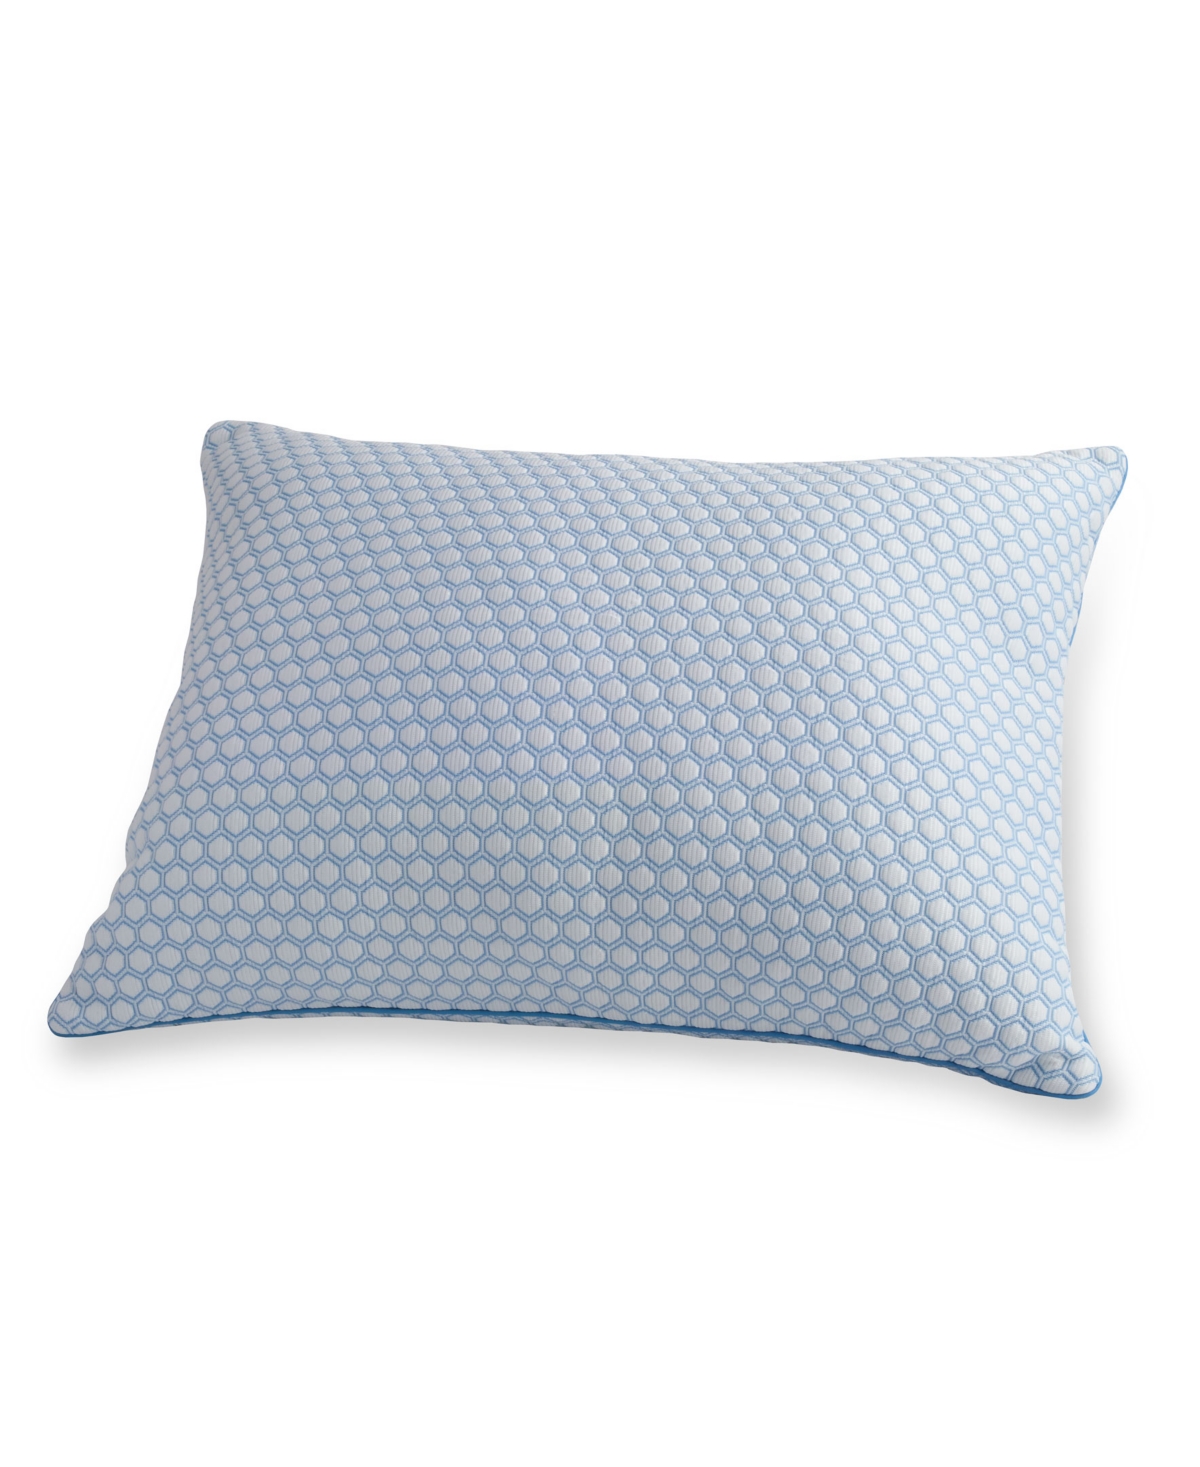 Trucool Serene Foam Hybrid Pillow, Standard In Multi